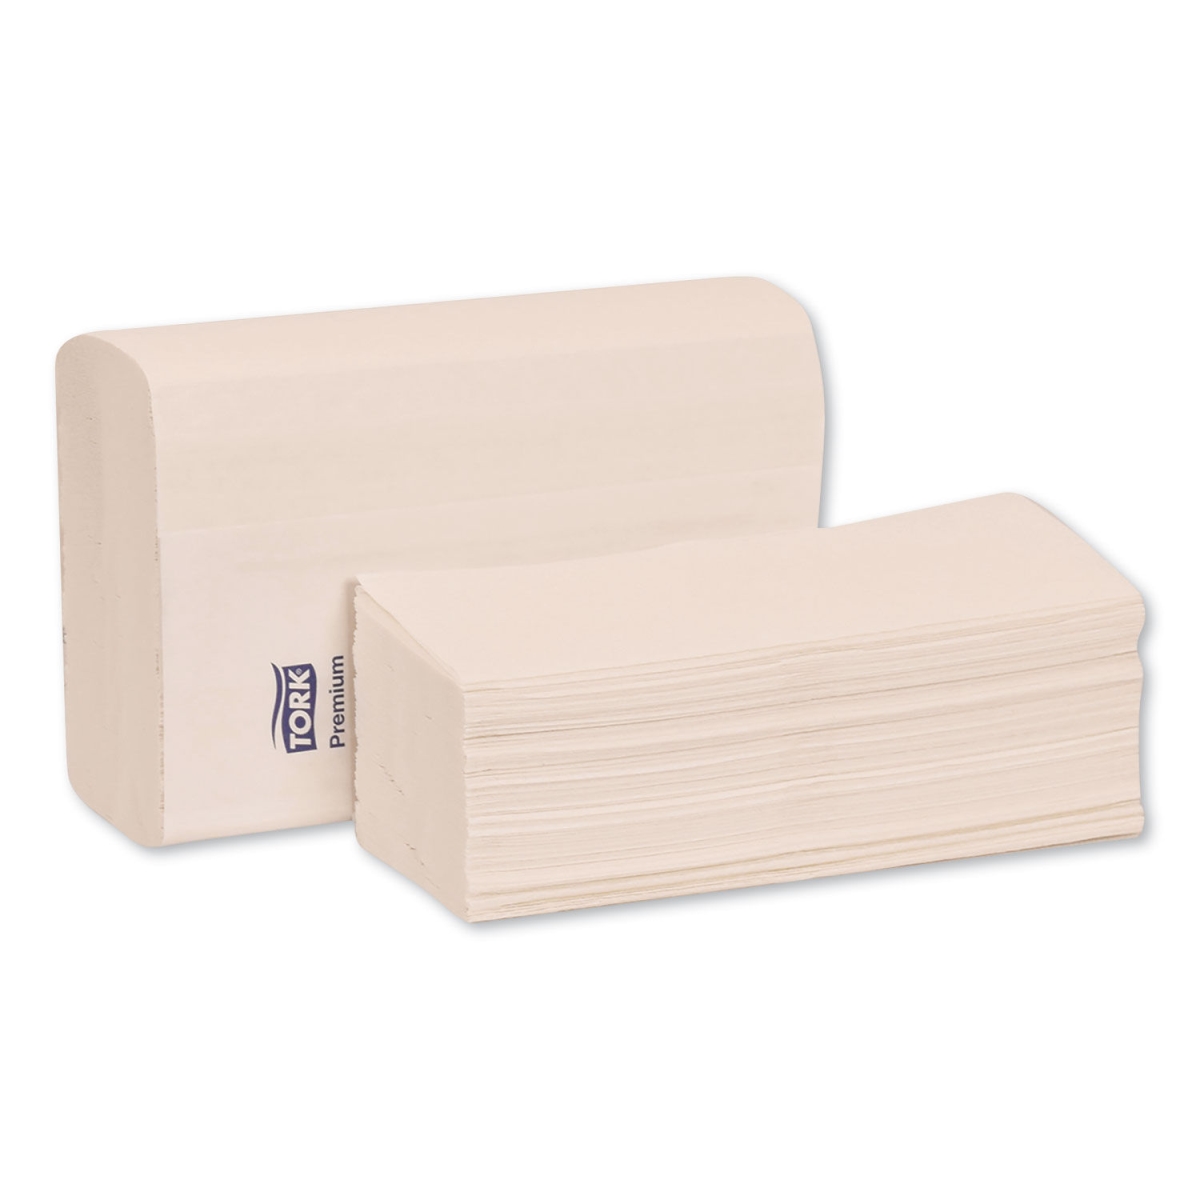 Trk420580 Multifold Towel, White - 250 Per Pack - Pack Of 12